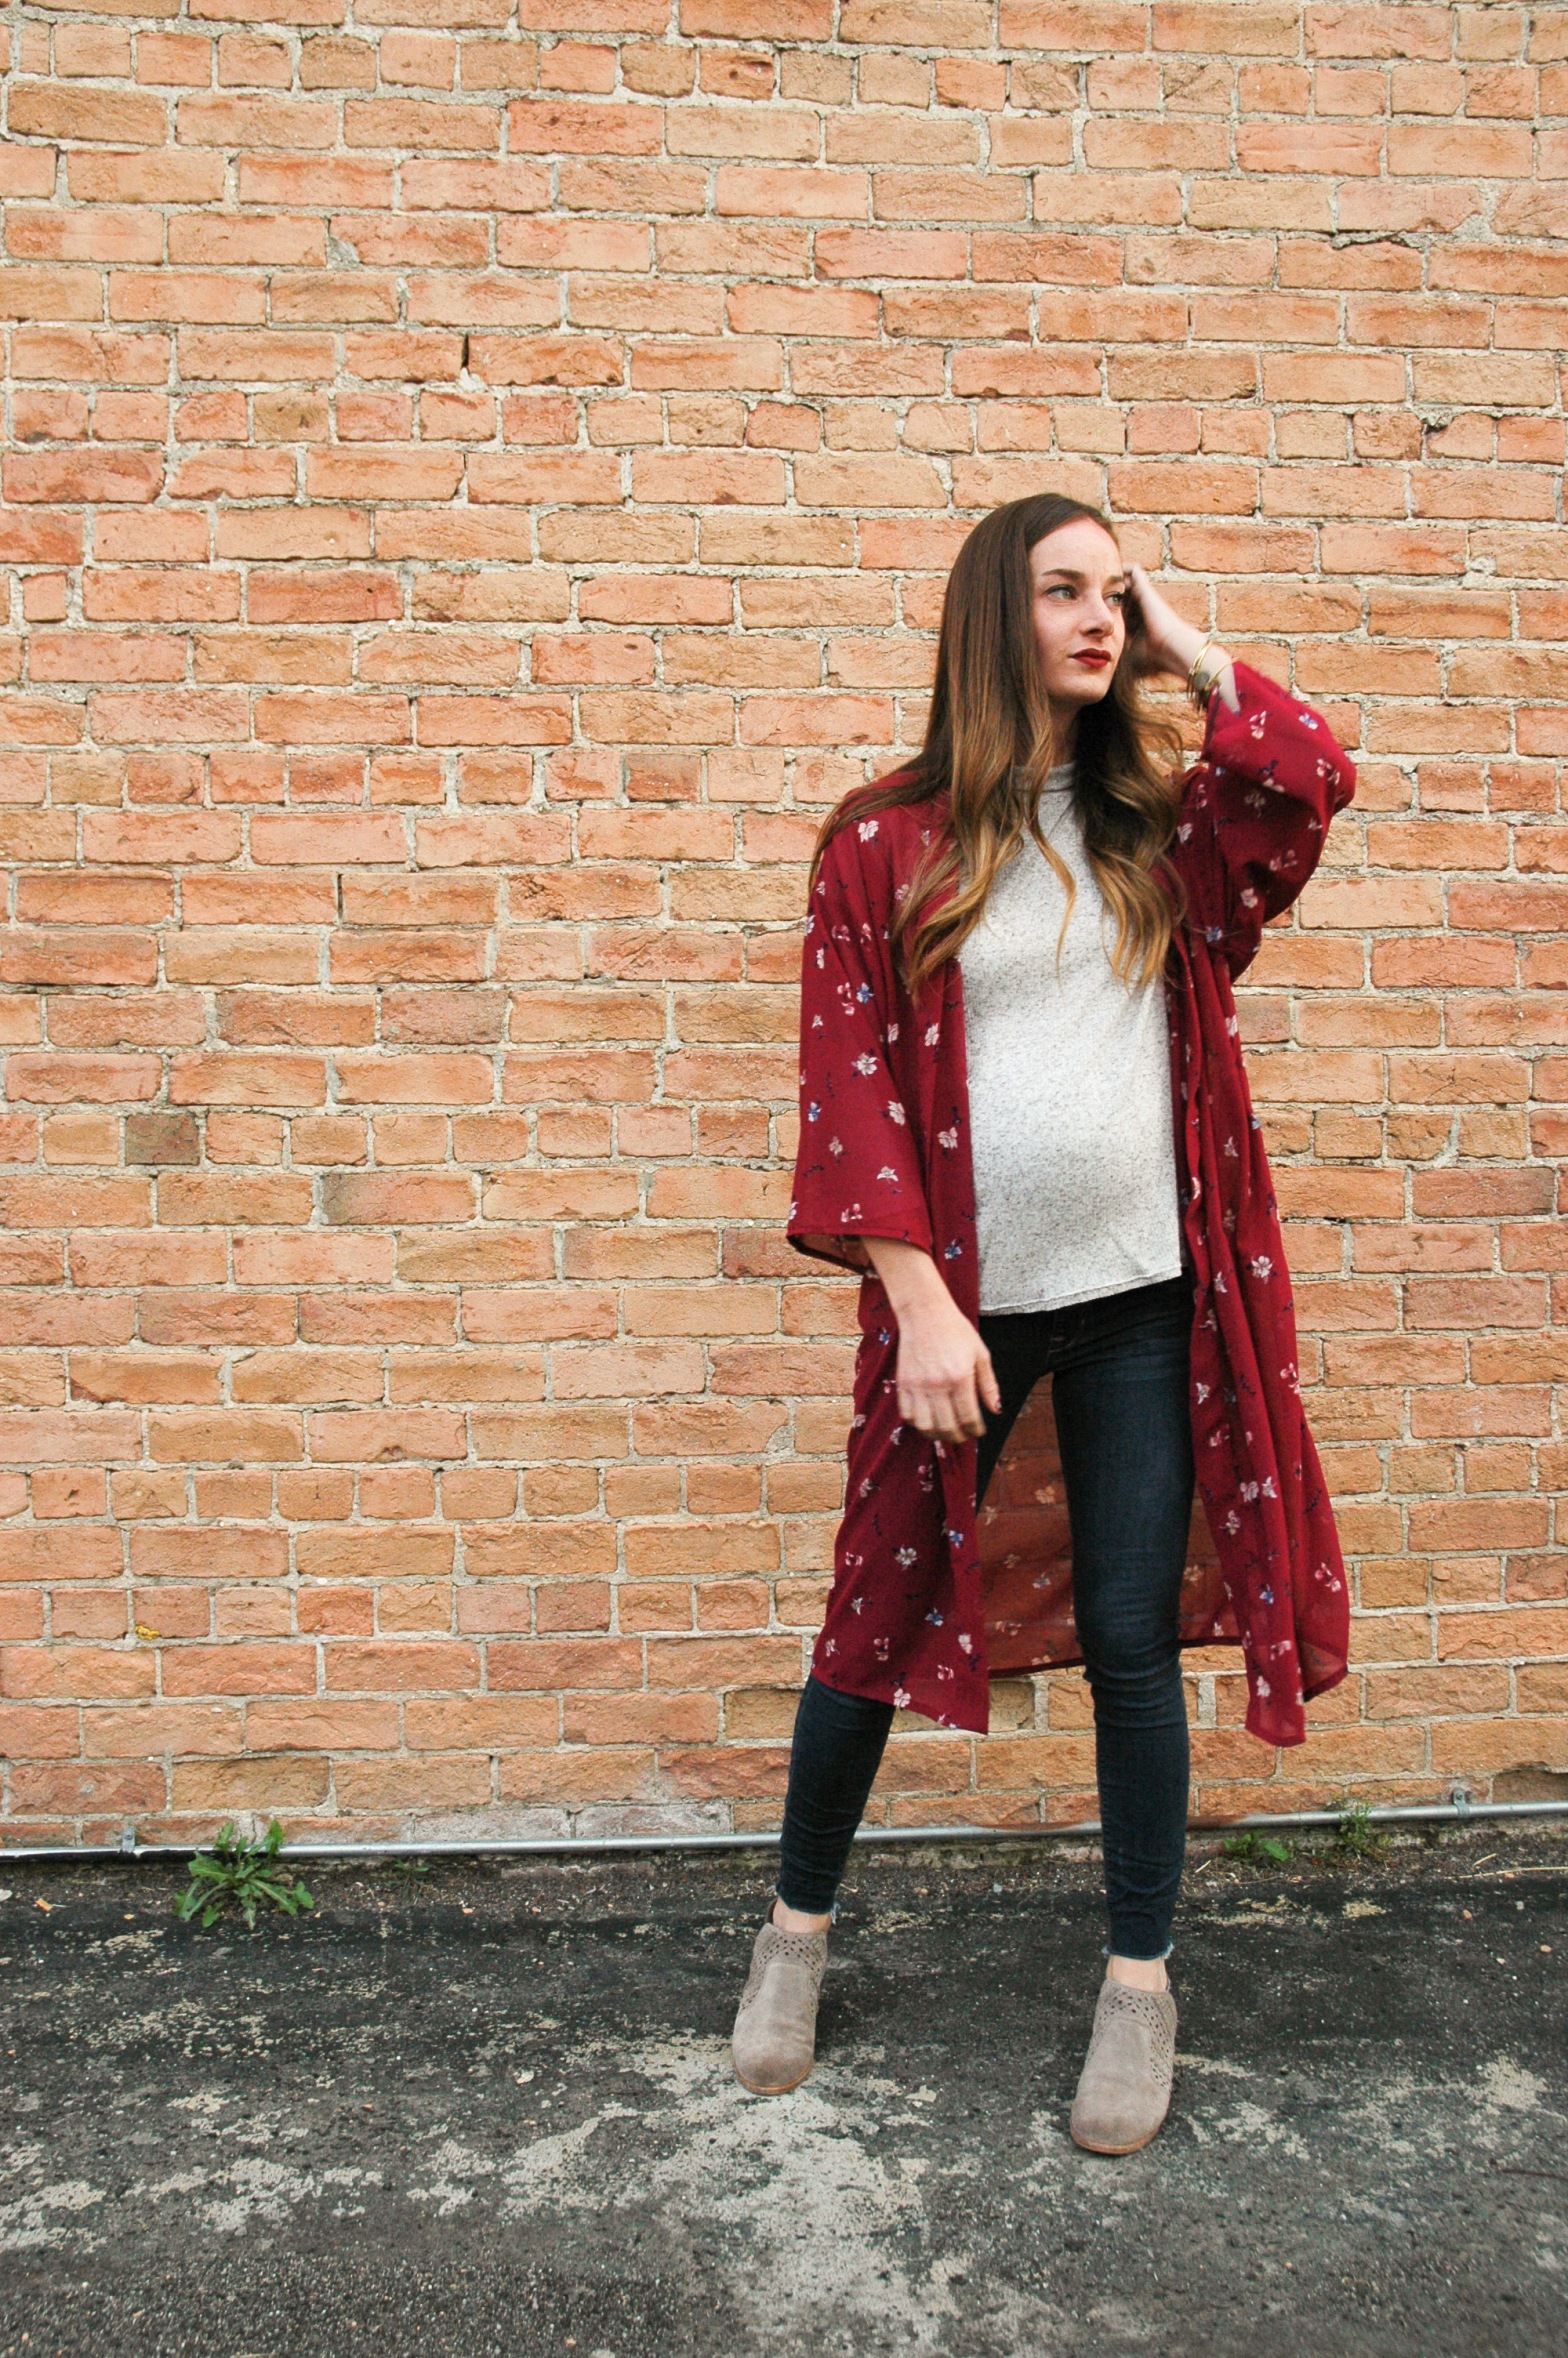 Stylish Fabric – The Sara Project